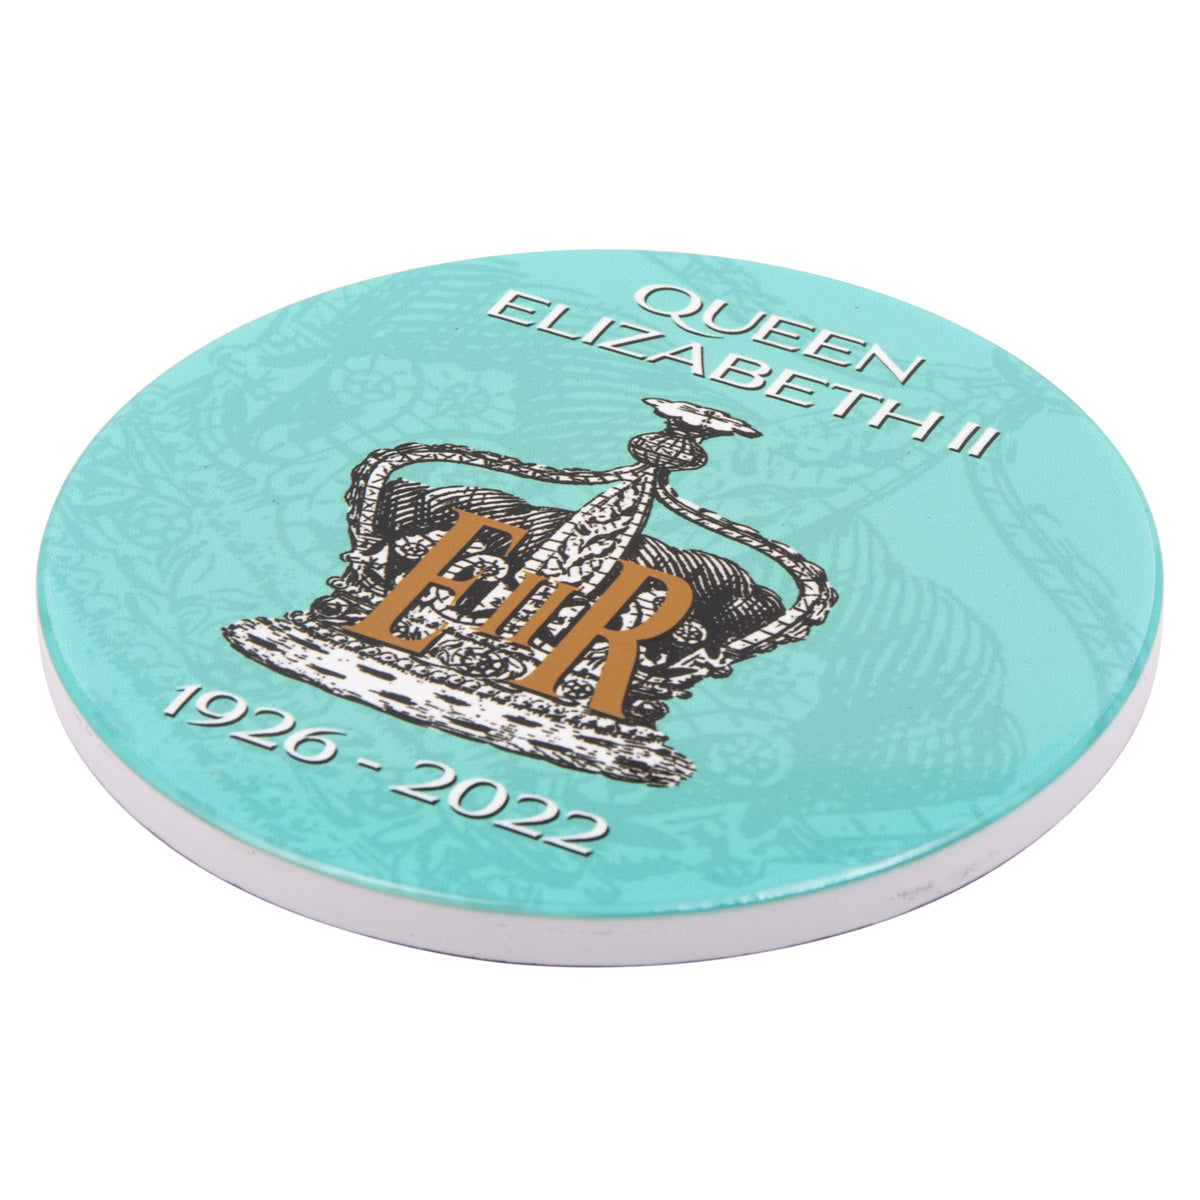 Queen Elizabeth II Royal Accession Ceramic Coaster Teal 1